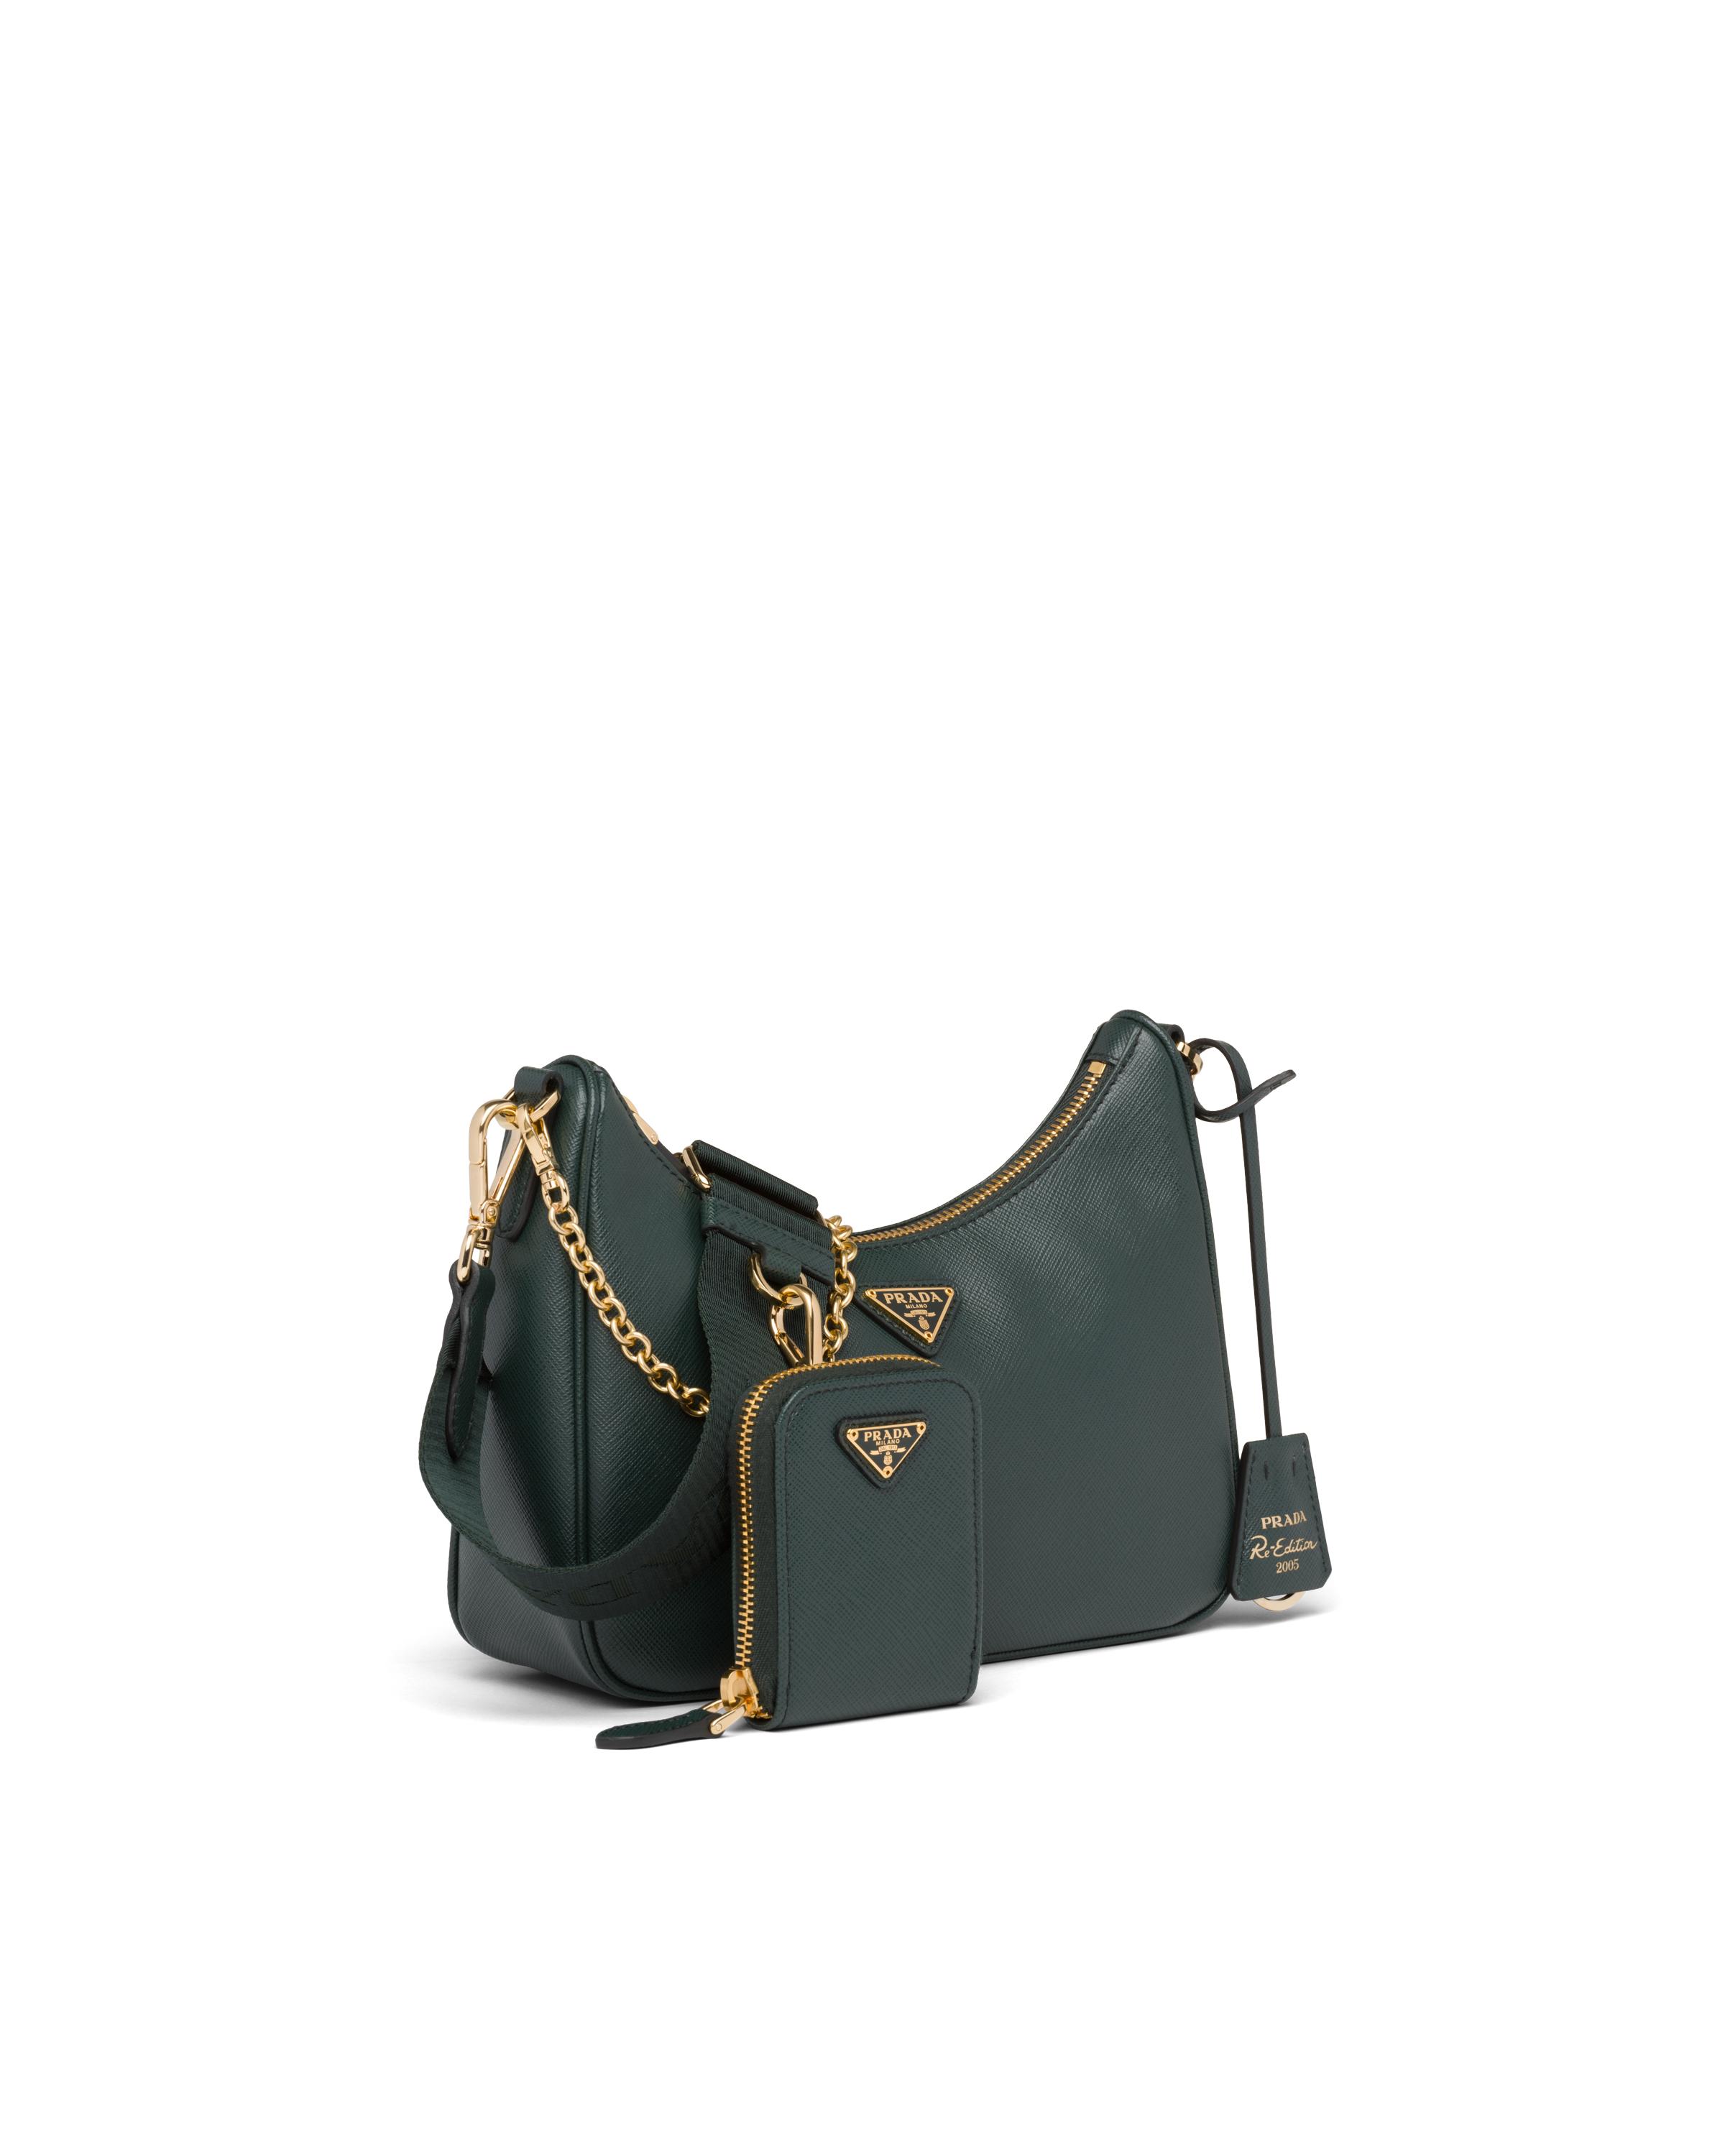 Prada Re-edition 2005 Saffiano Leather Bag in Green | Lyst